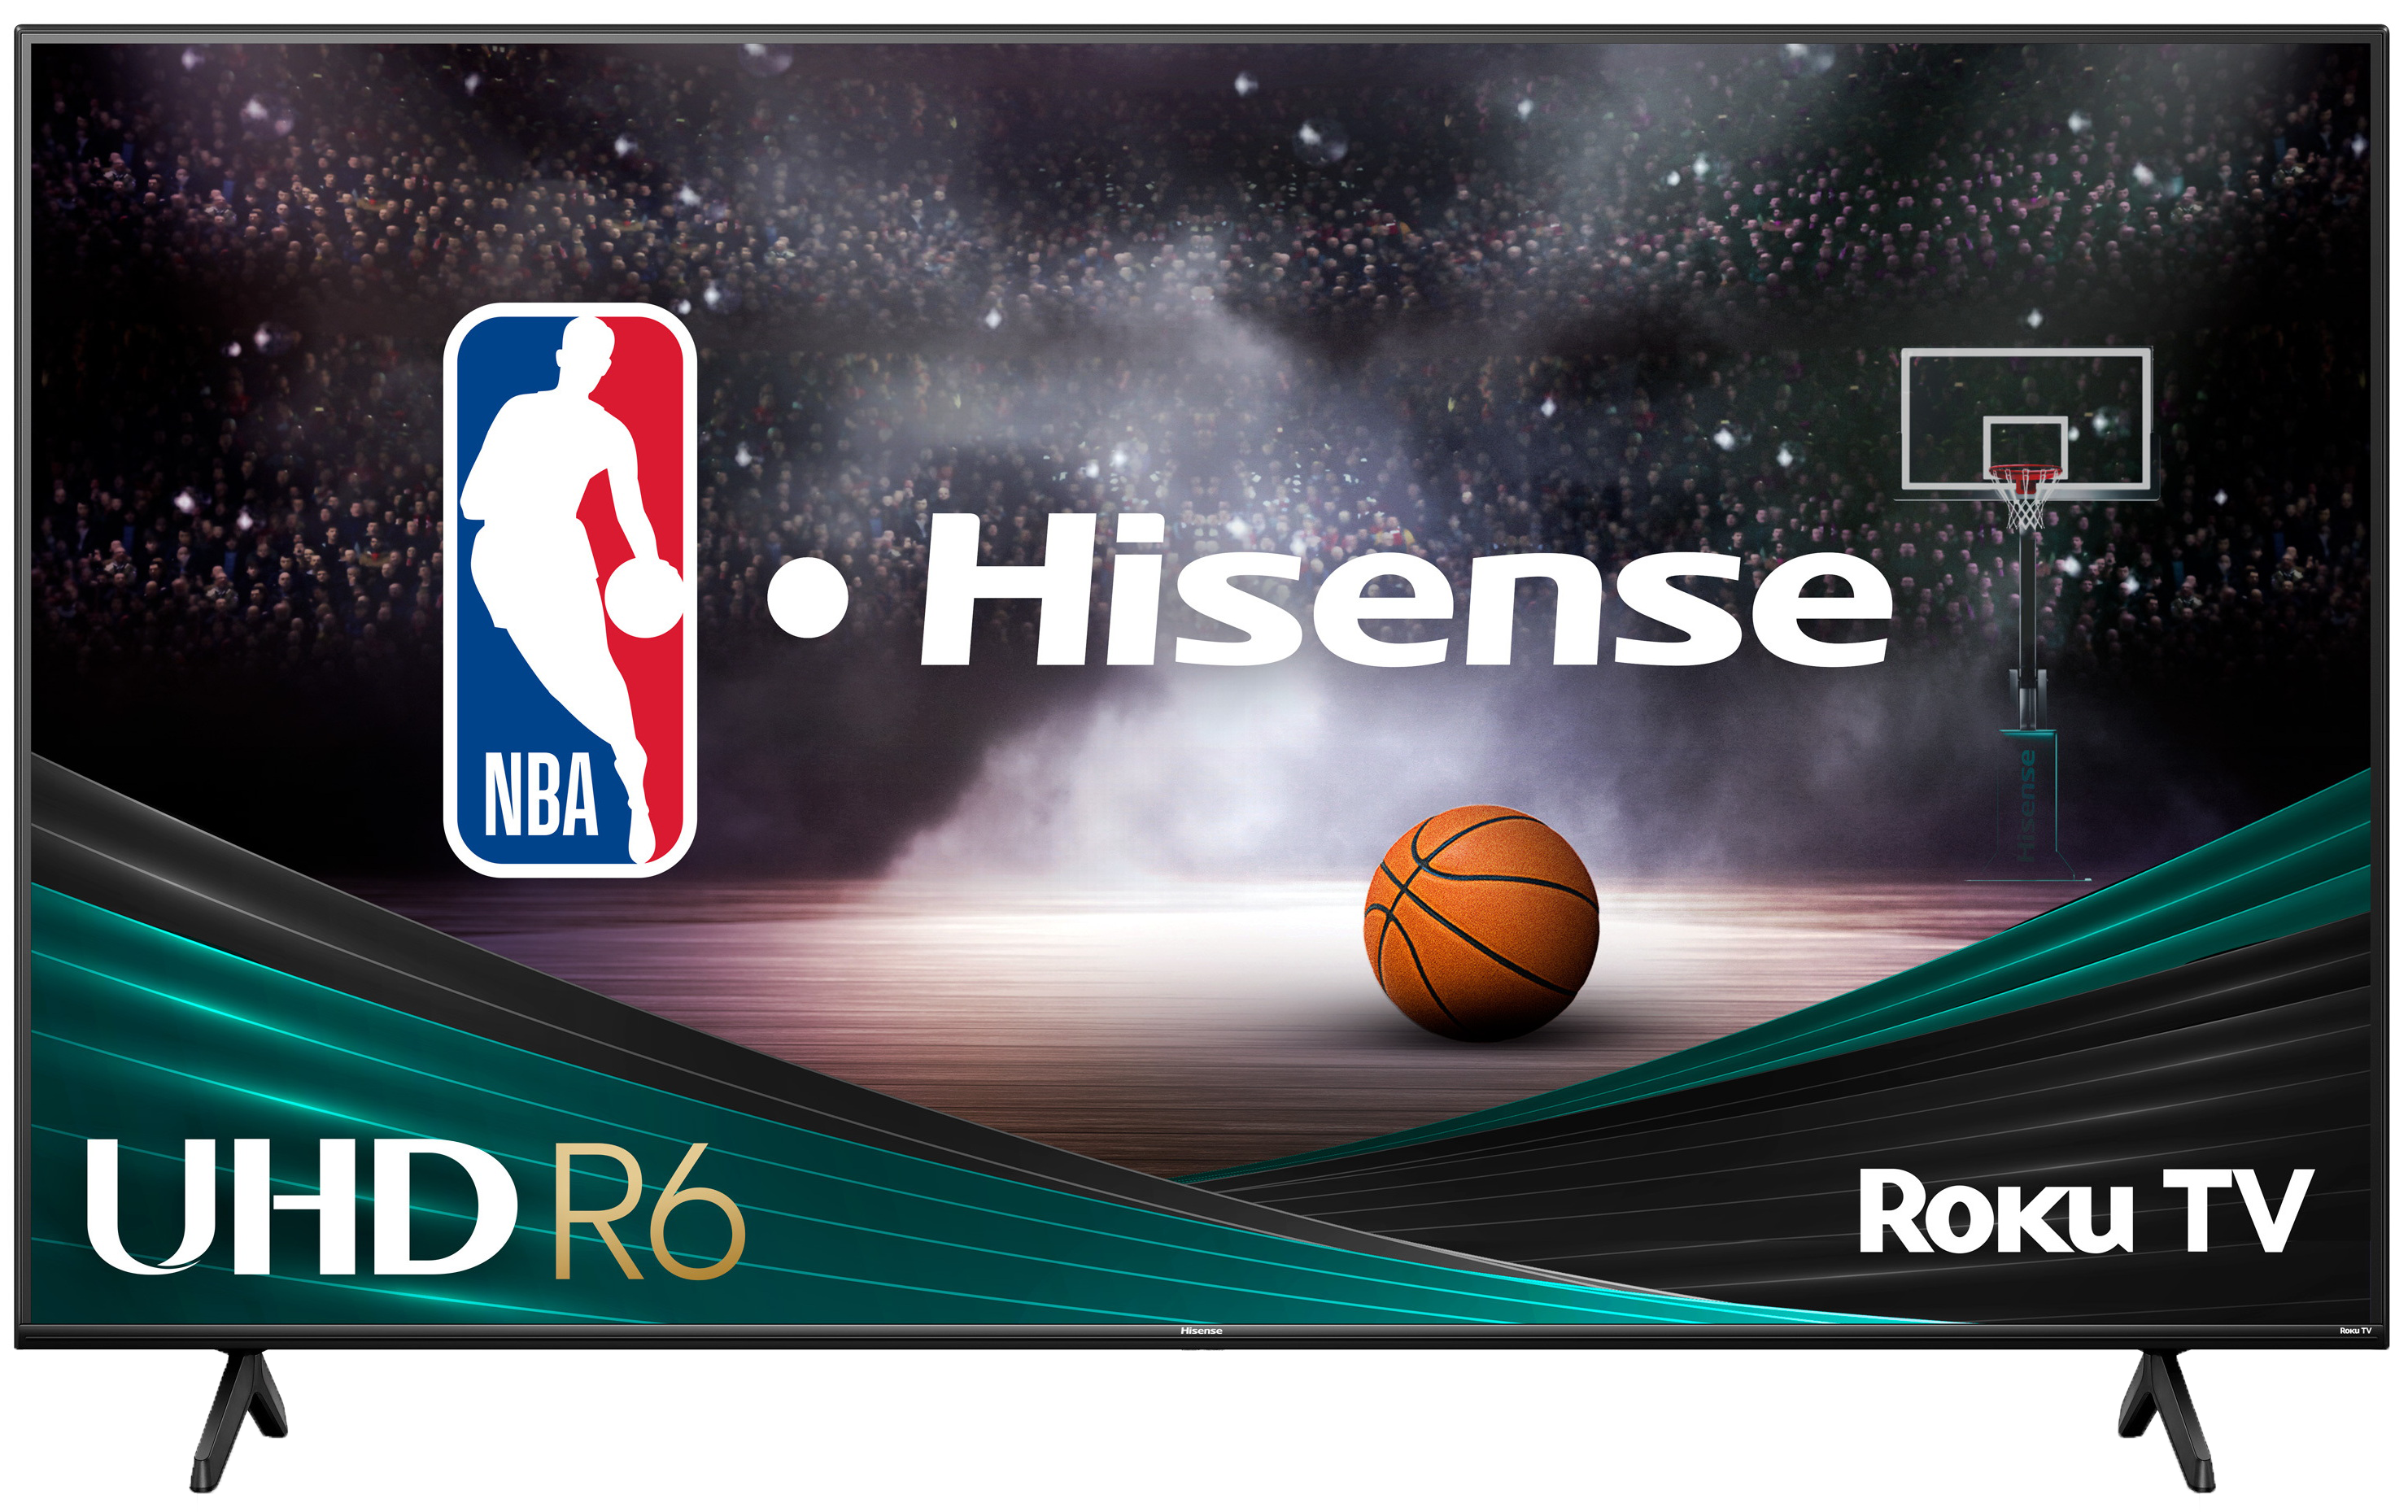 Hisense 50" Class 4K UHD LED LCD Roku Smart TV HDR R6 Series 50R6E3 - image 1 of 19